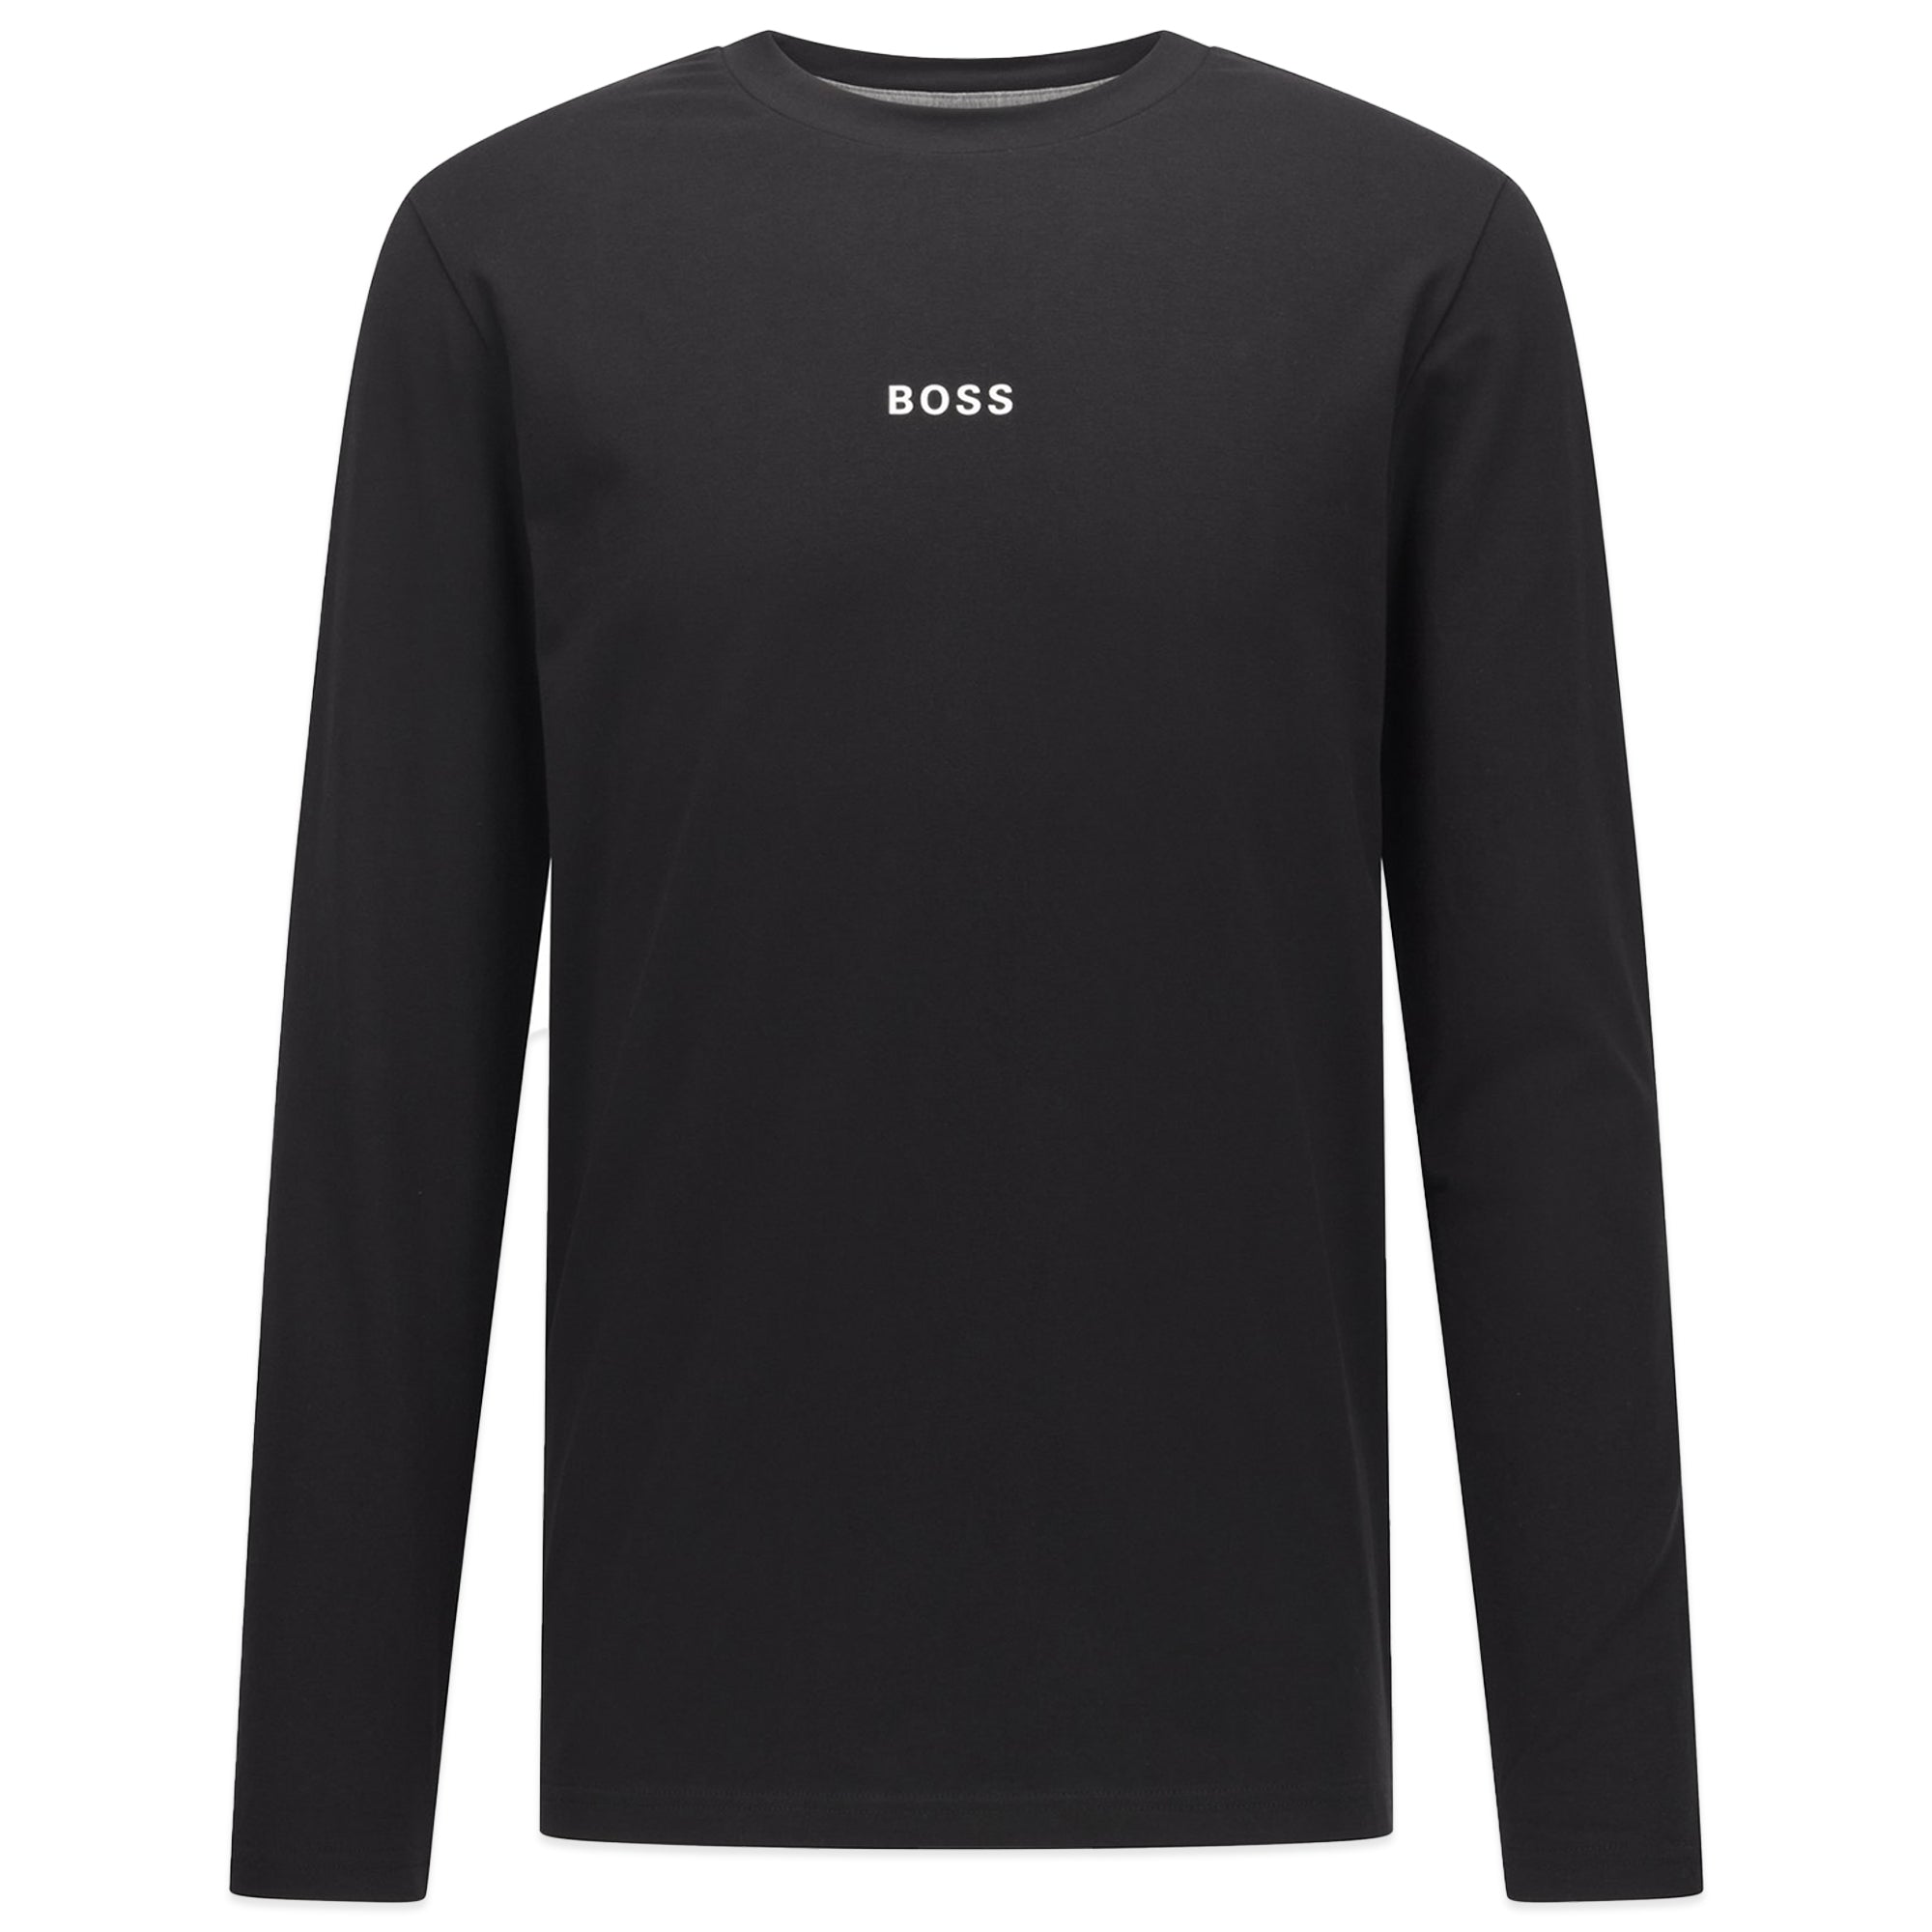 Boss TChark 1 Long Sleeve T-Shirt - Black